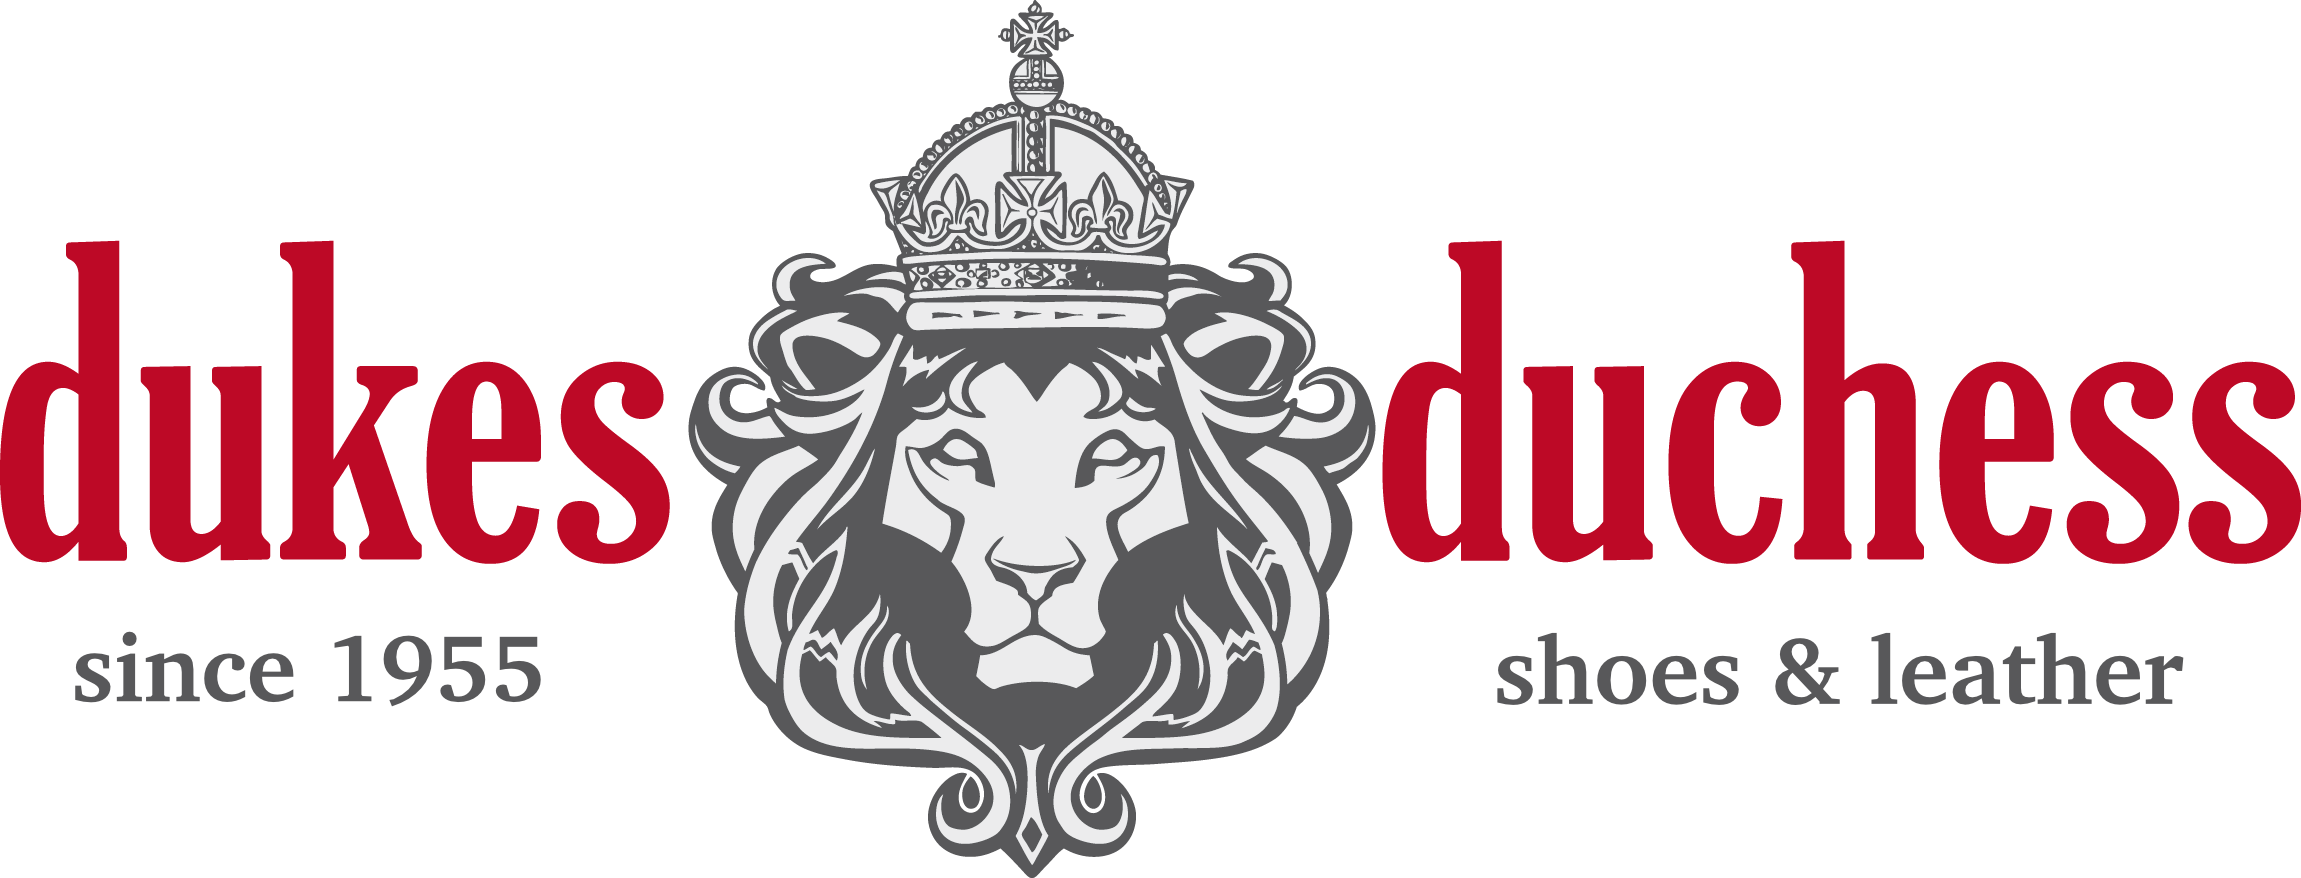 Dukes-and-Duchess Online Shop